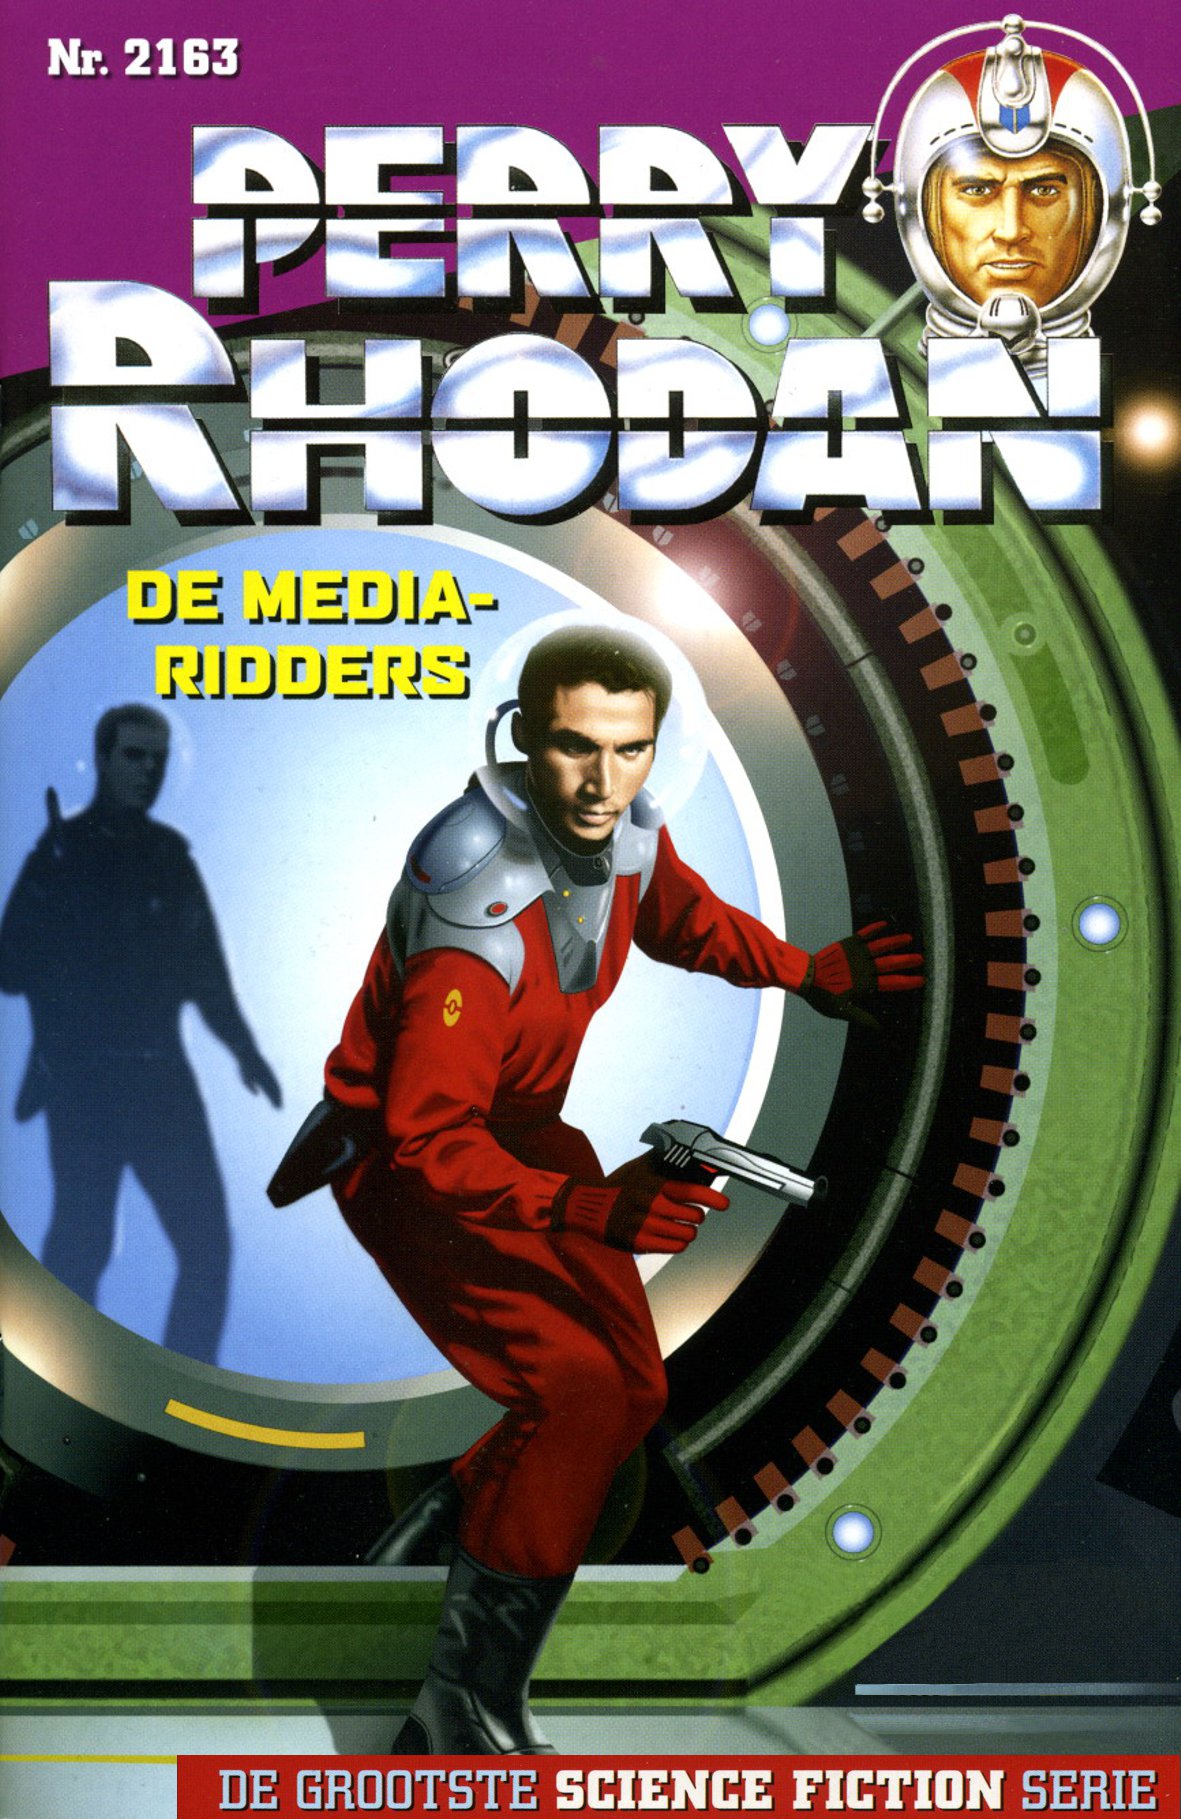 Perry Rhodan 2163 - De media-ridders